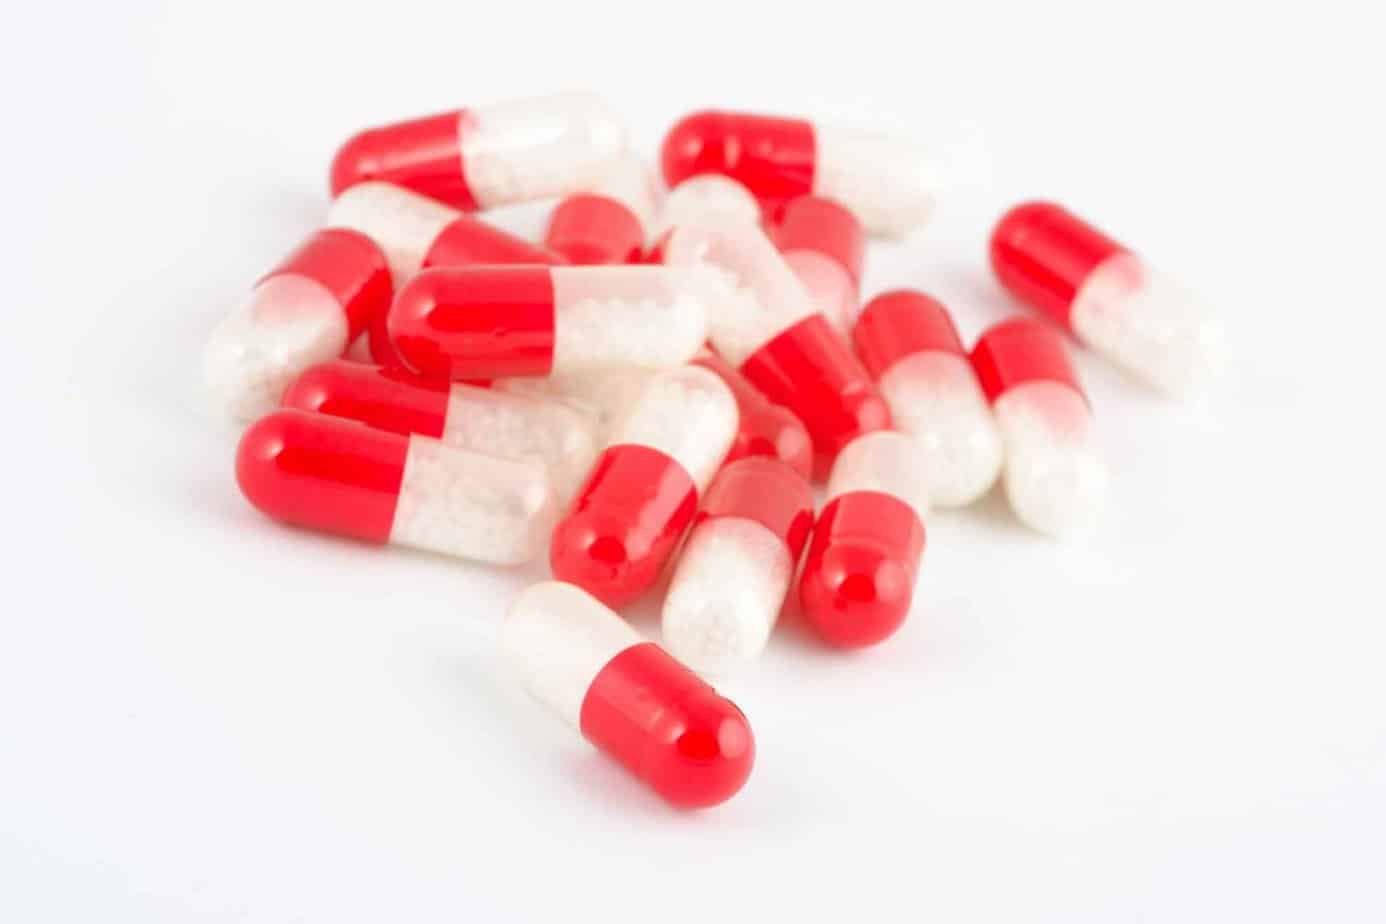 red and white amphetamine capsules